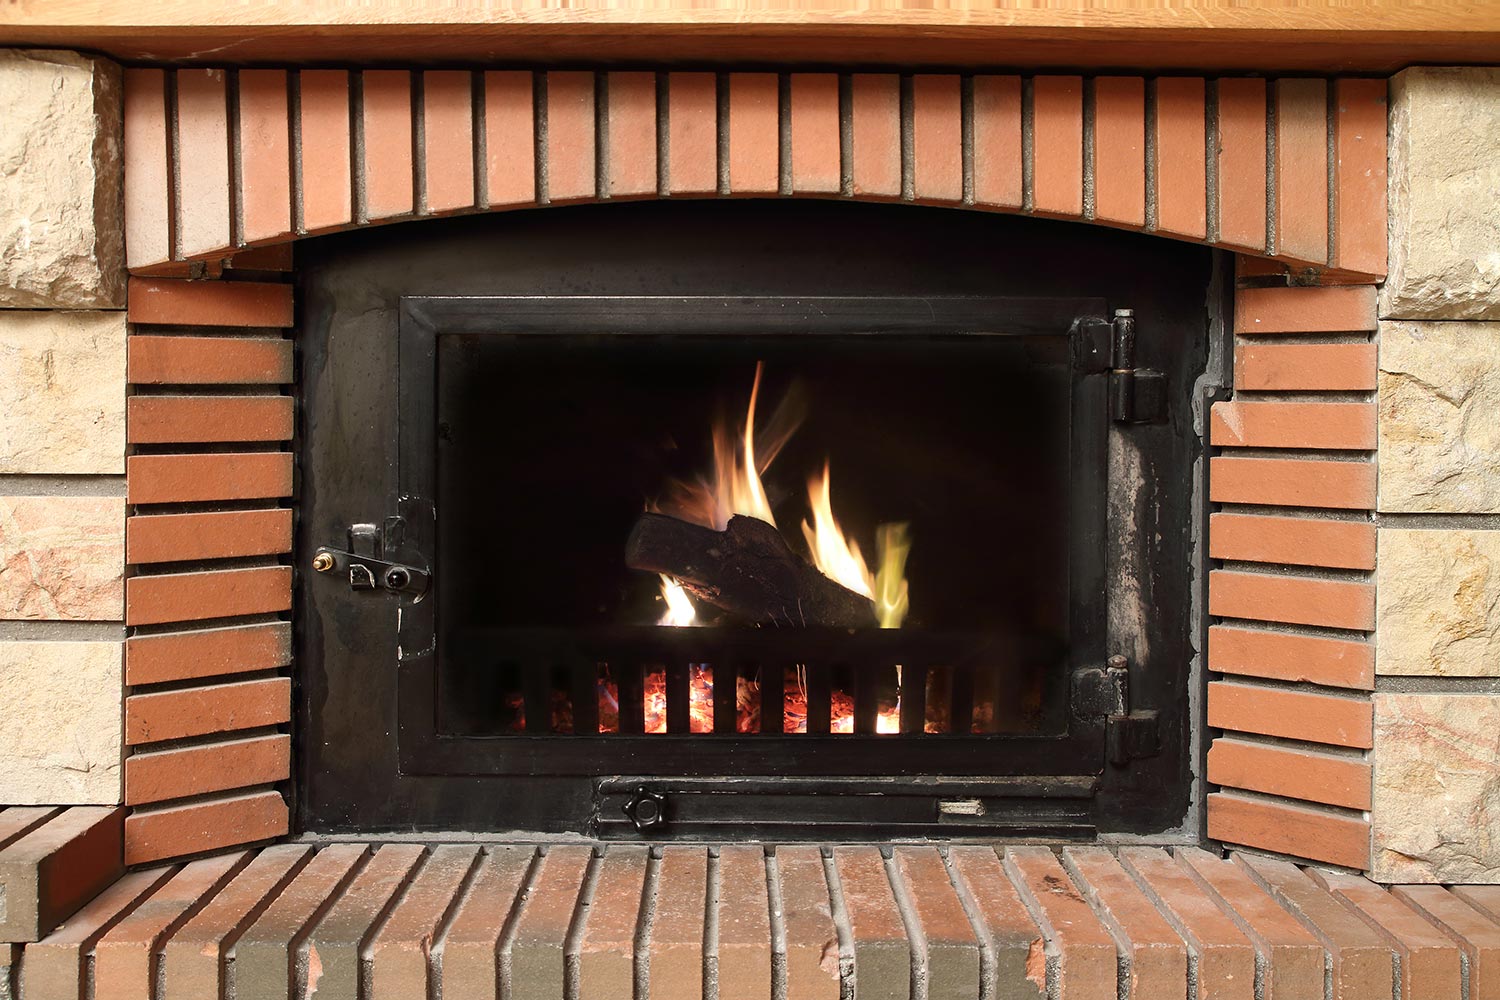 Fire in a brick fireplace in winter